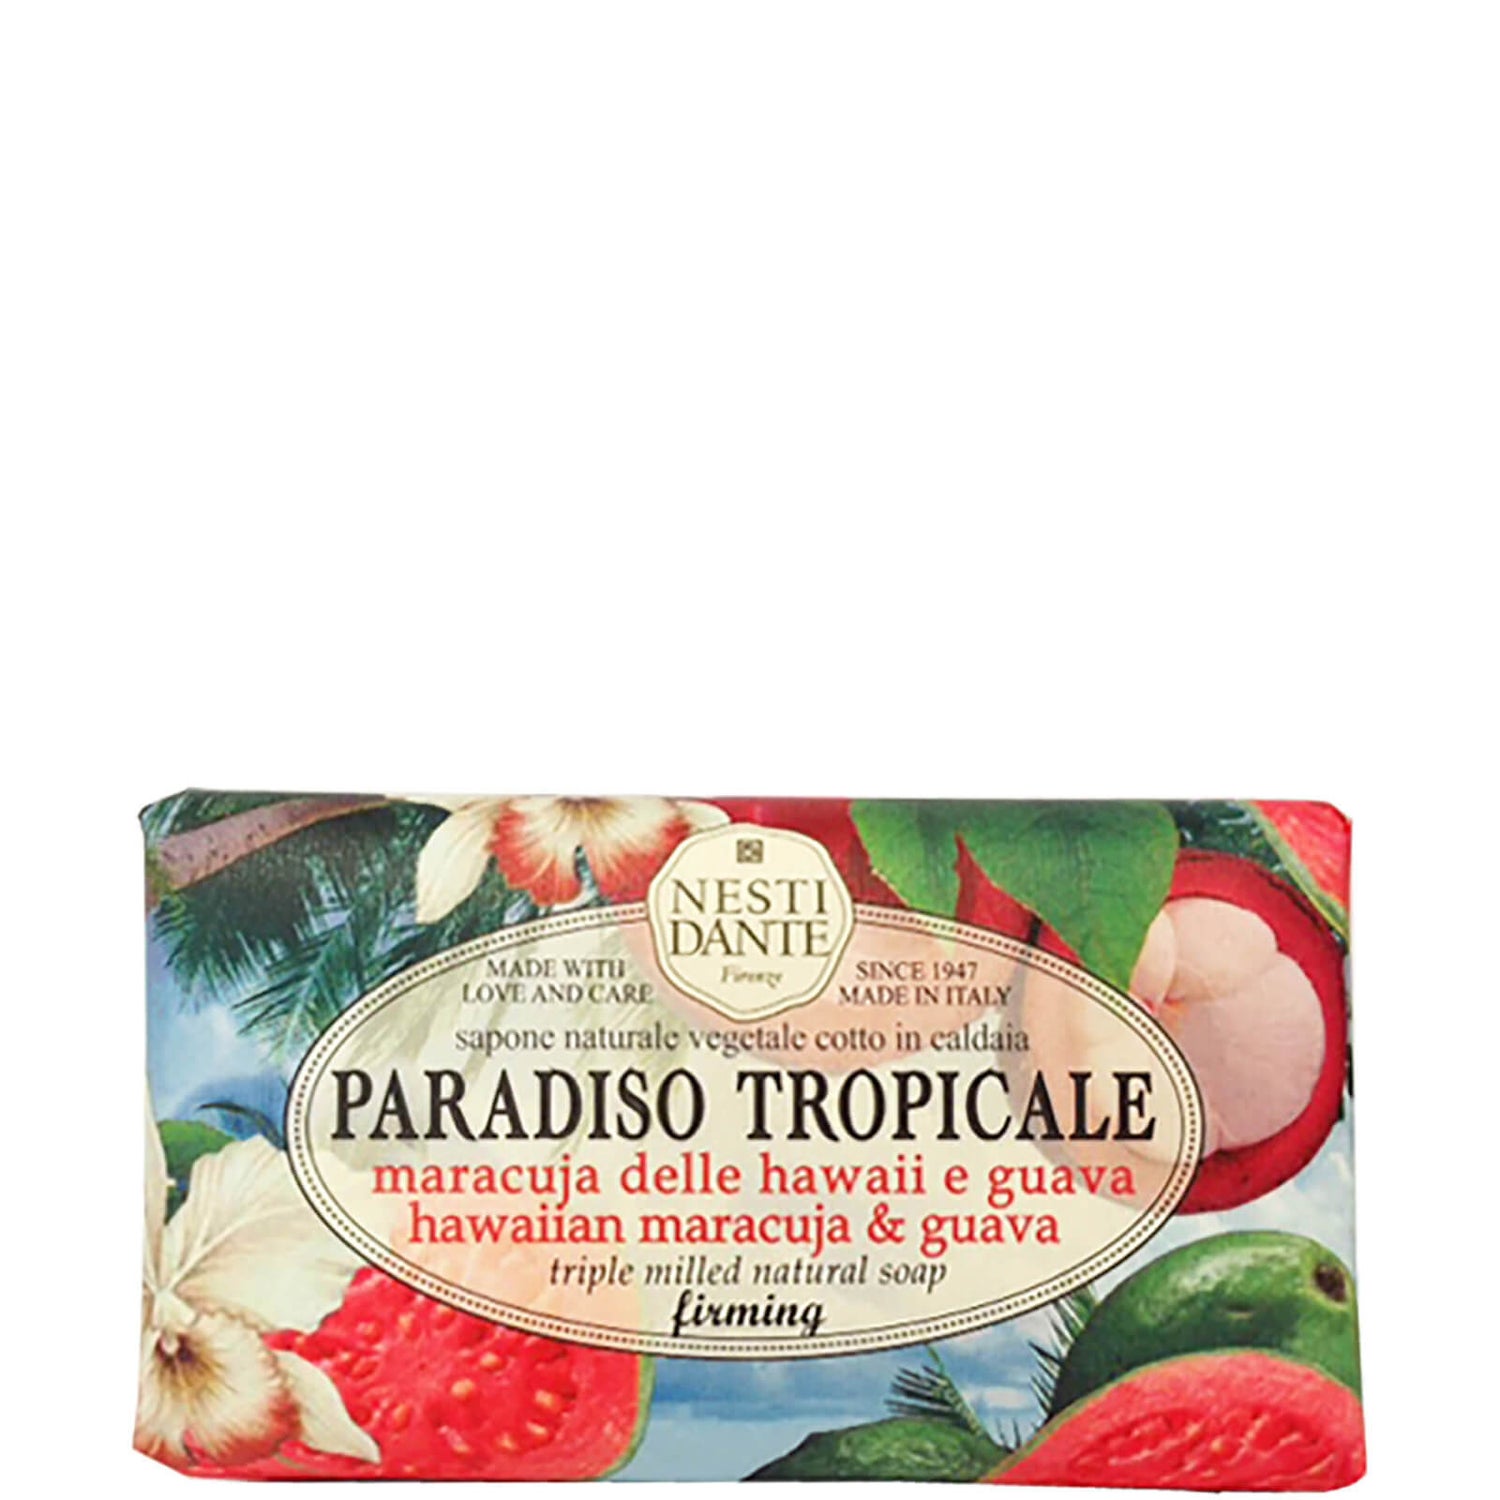 Nesti Dante Paradiso Tropicale Hawaiian Maracuja and Guava Soap(네스티 단테 파라디소 트로피칼 하와이안 마라쿠자 앤 구아바 솝 250g)